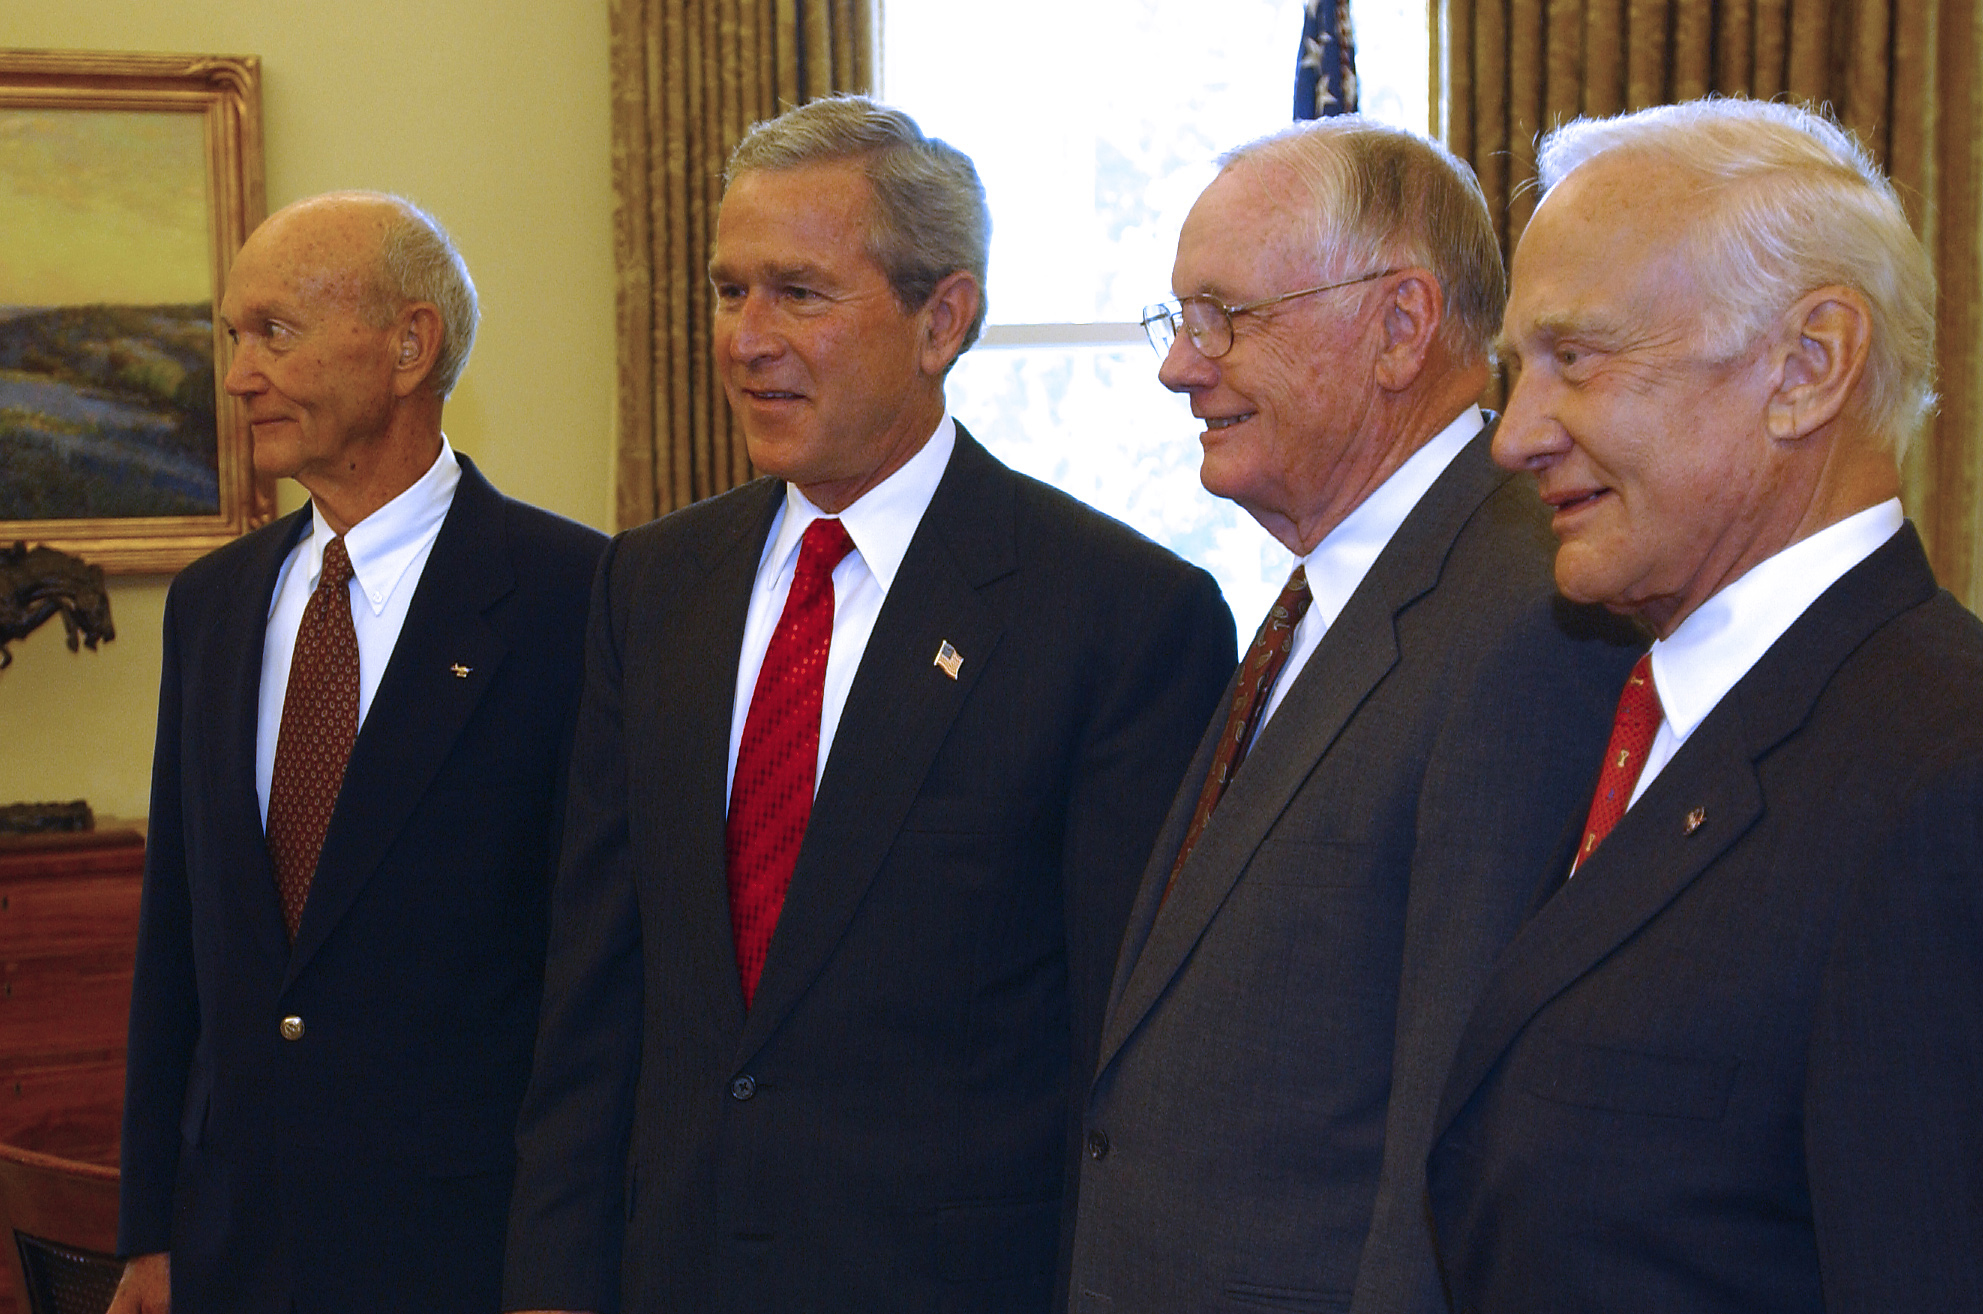 Nw Shtwpinw e Bardhw, presidenti amerikan Bush, pret tre astronautwt